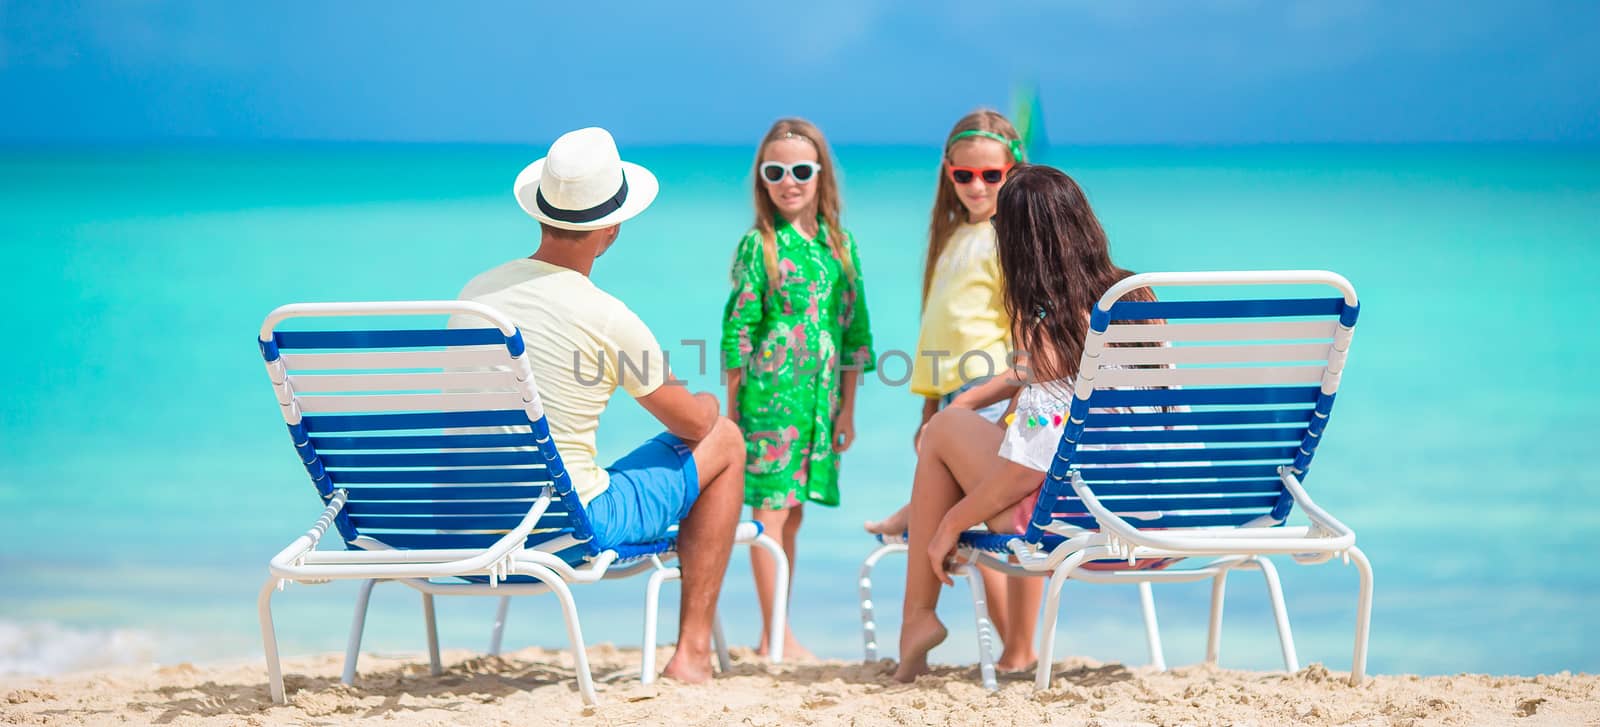 Family of four on beach holidays by travnikovstudio